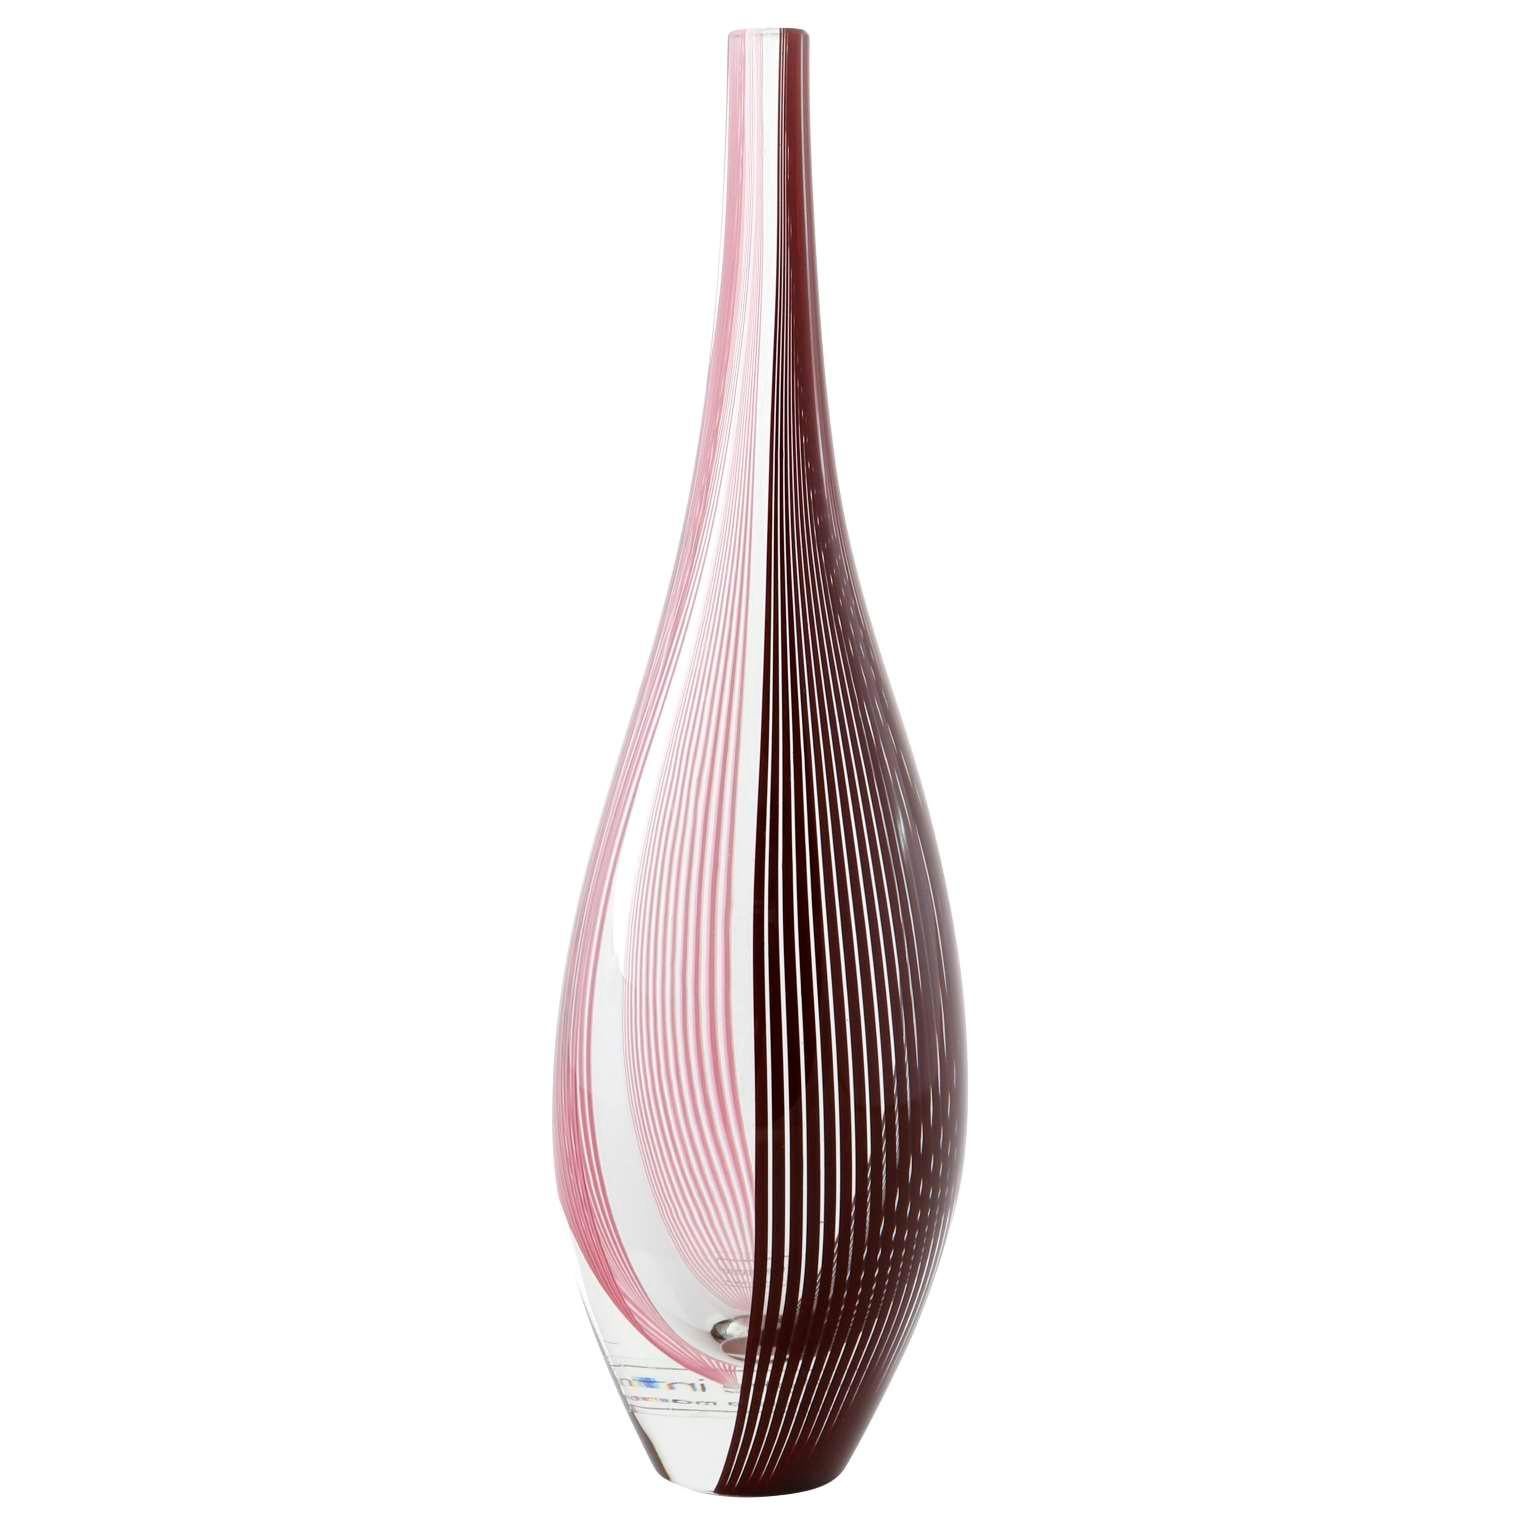 Late 20th Century Glass Vase Lino Tagliapietra for Effetre International, Purple Pink, Italy, 1986